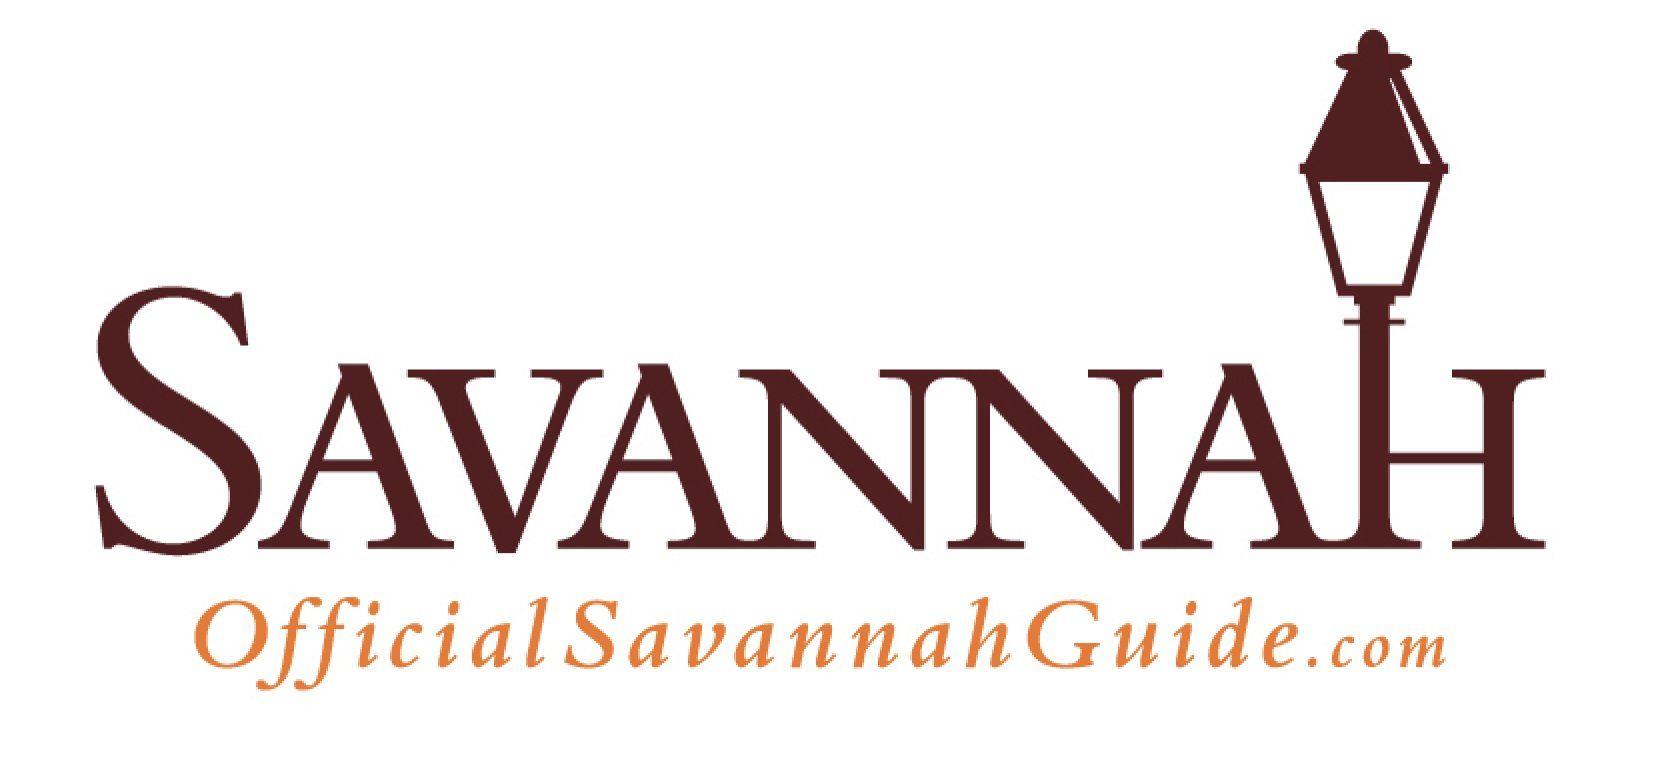 tourist attractions of savannah georgia